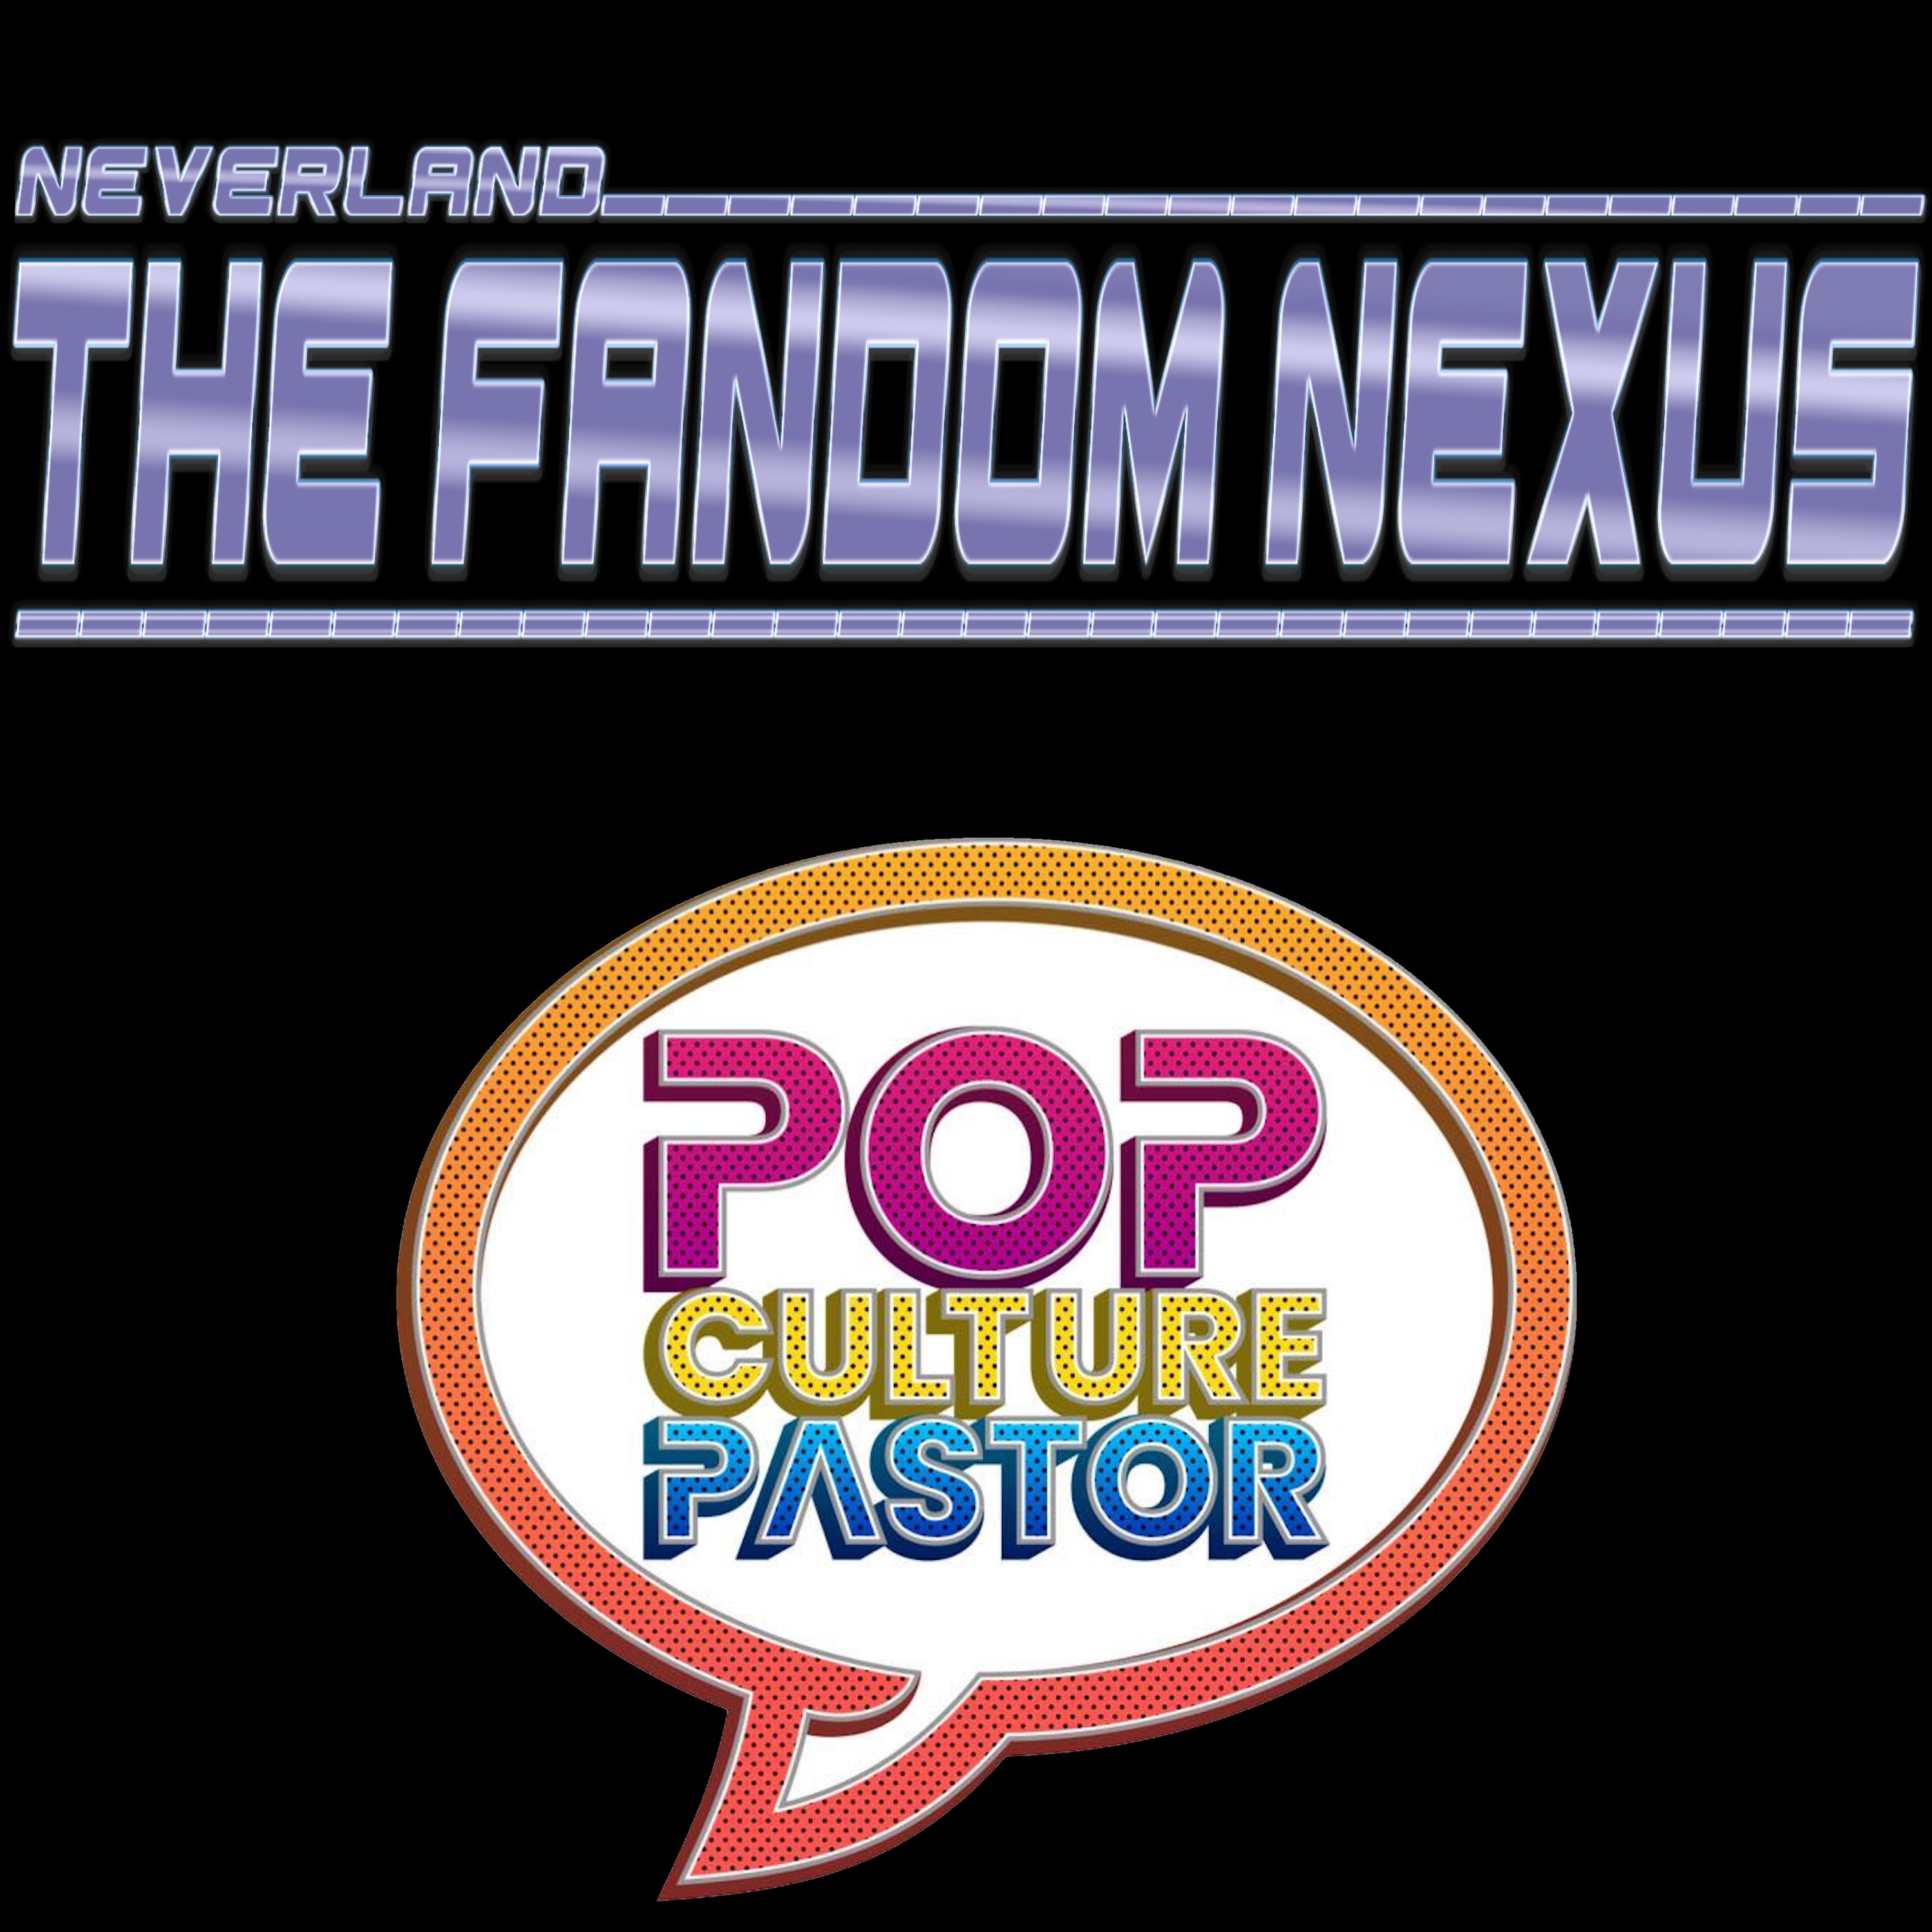 Pop Culture Pastors at Planet Comicon - The Fandom Nexus 449